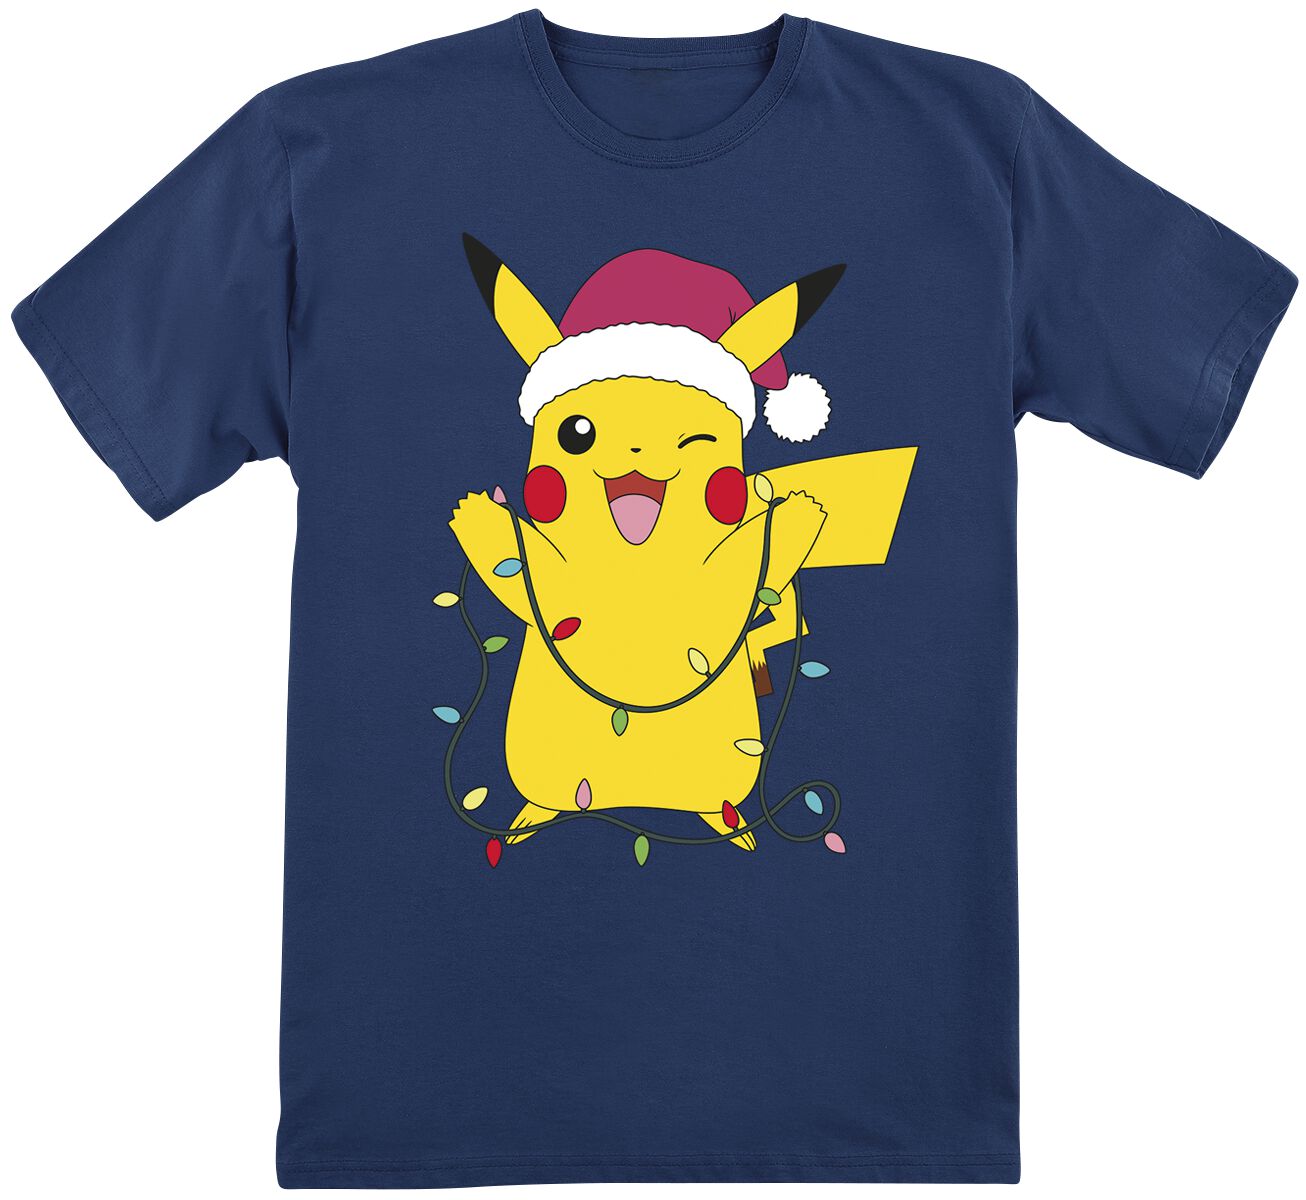 Pokémon Pikachu - Xmas T-Shirt blue